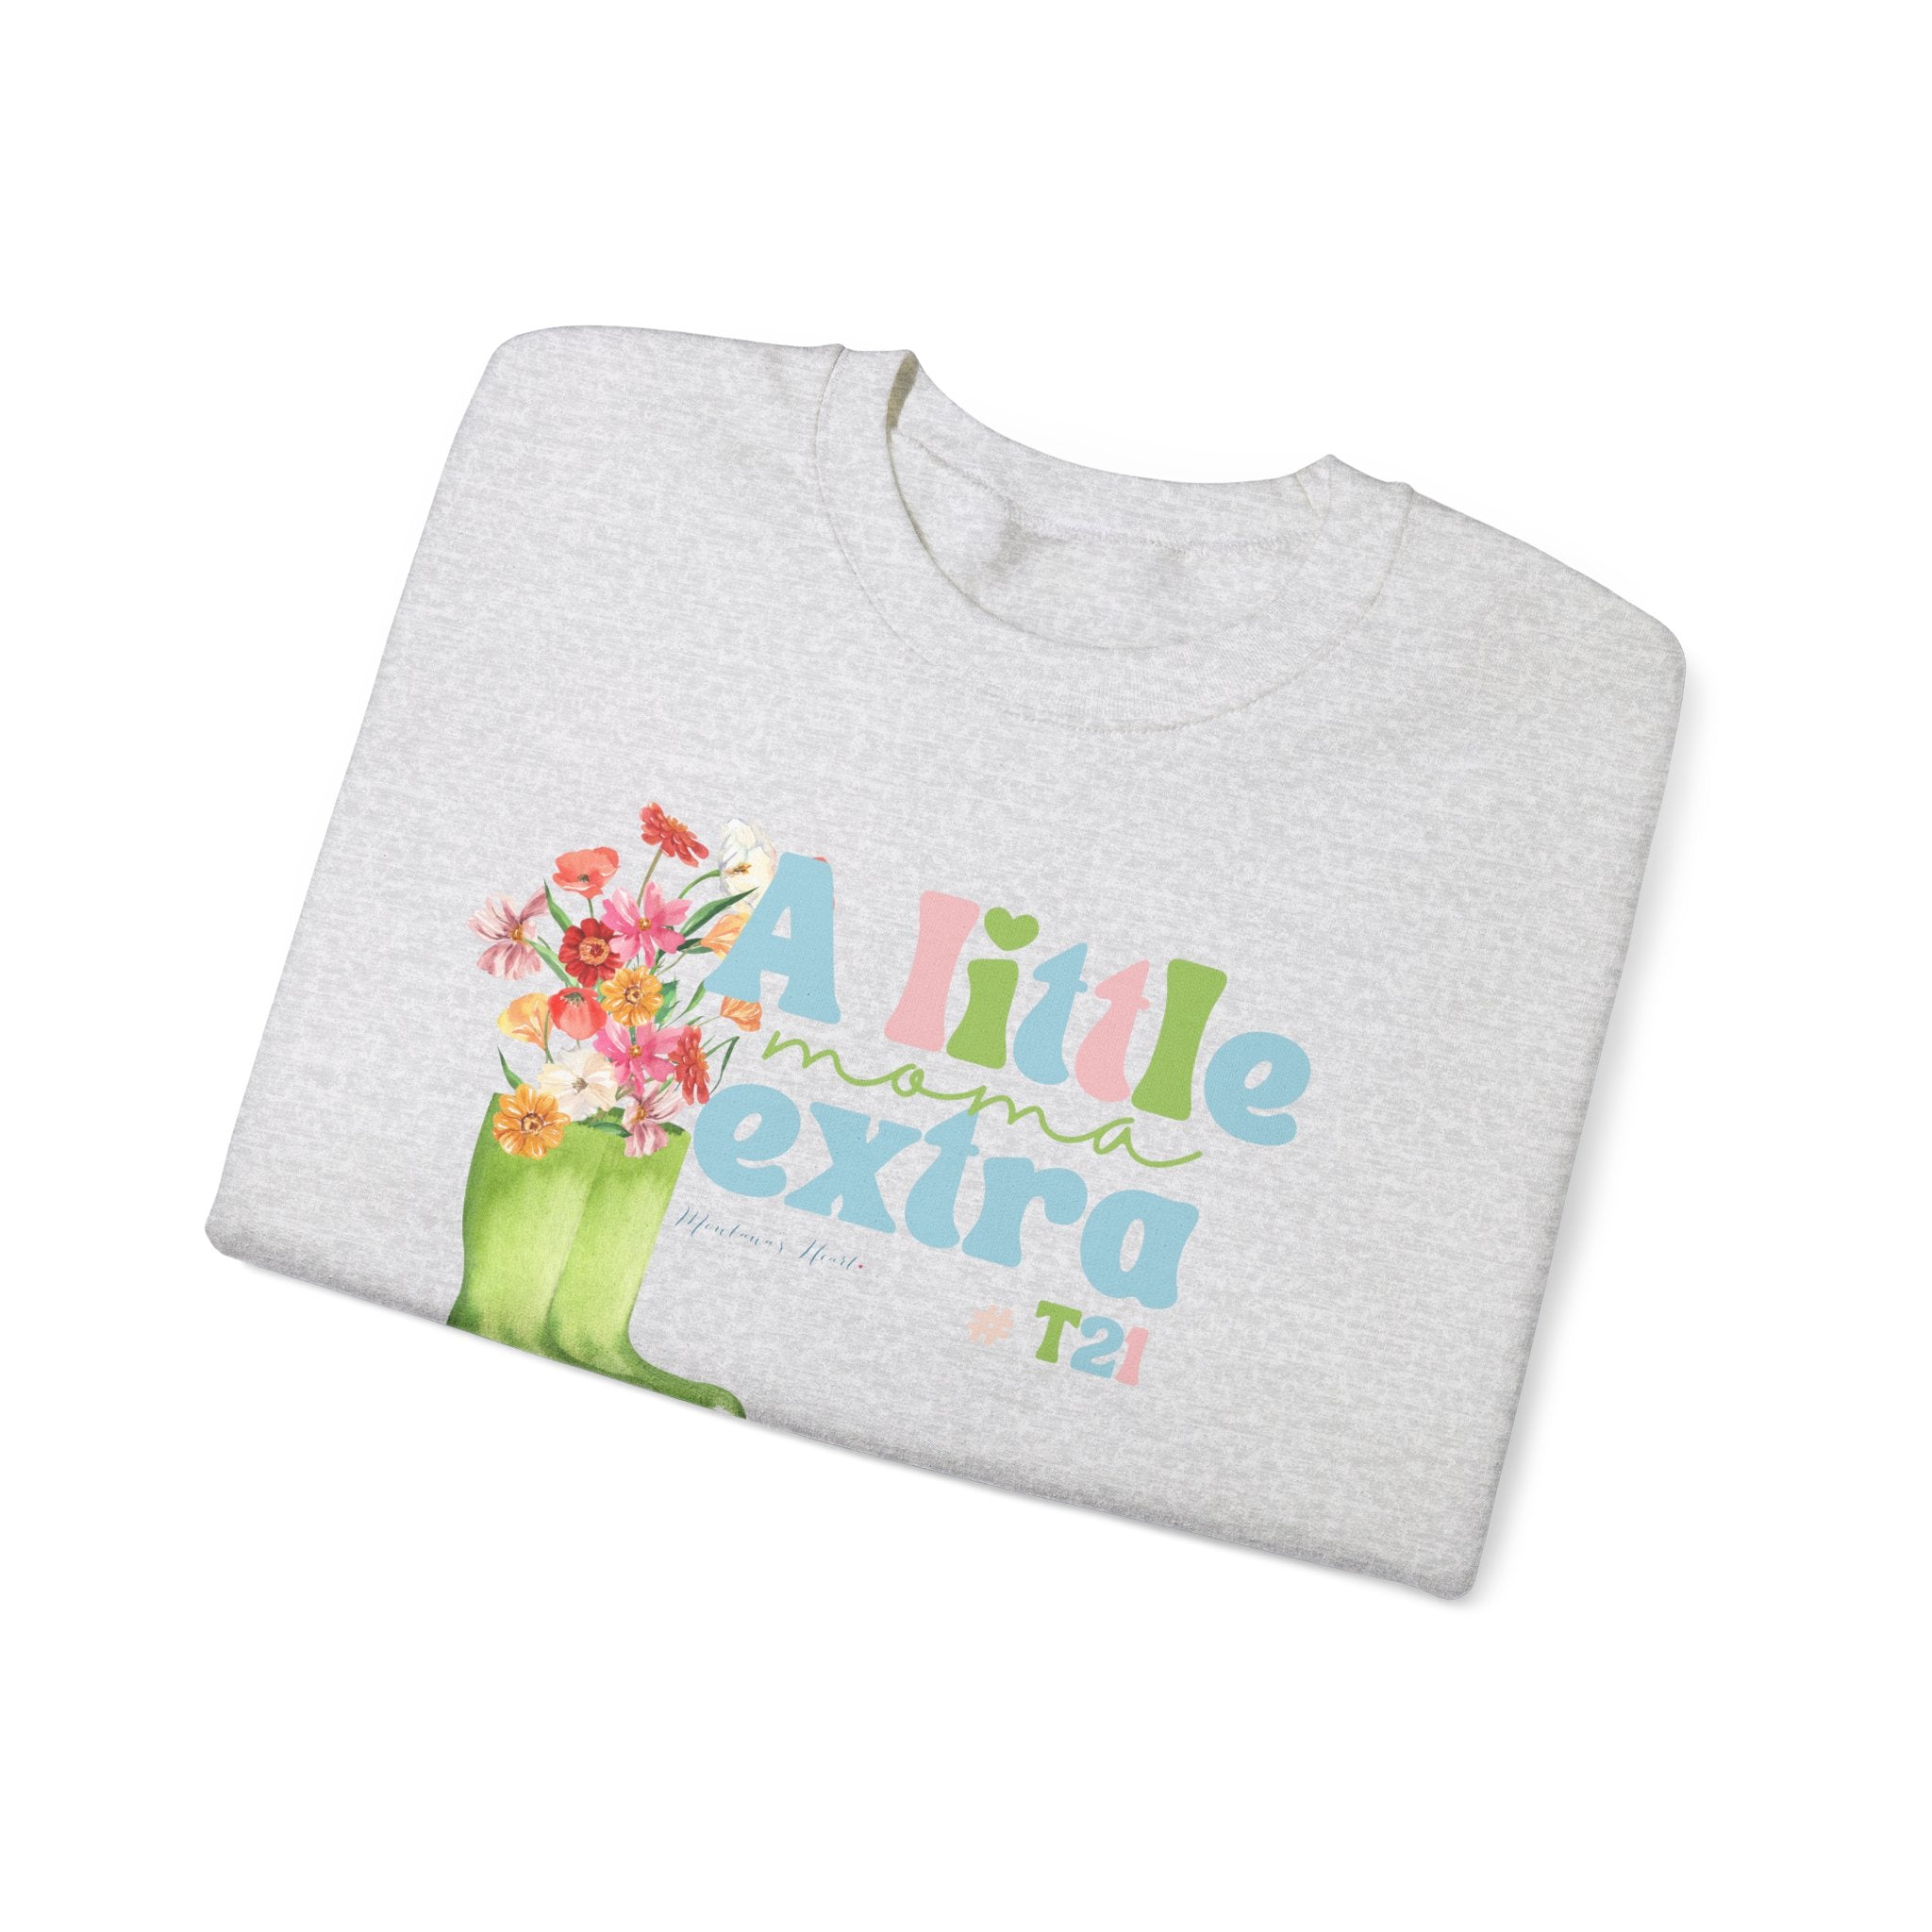 A little Extra Moma #T21 Ladies sweatshirt